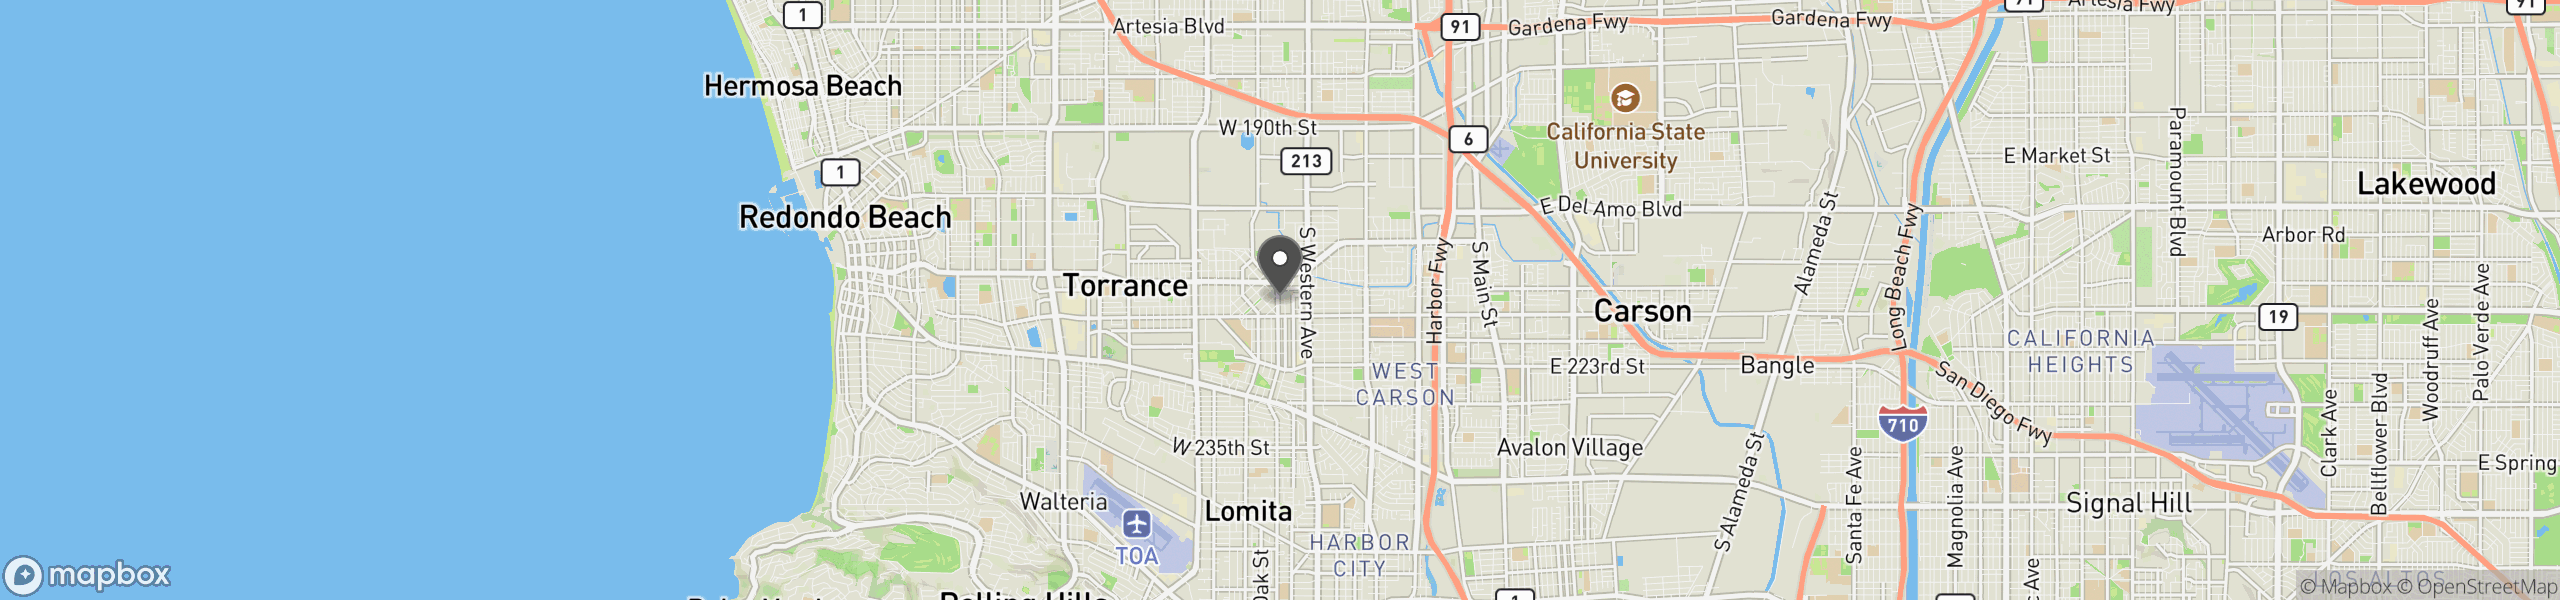 Torrance, CA 90501